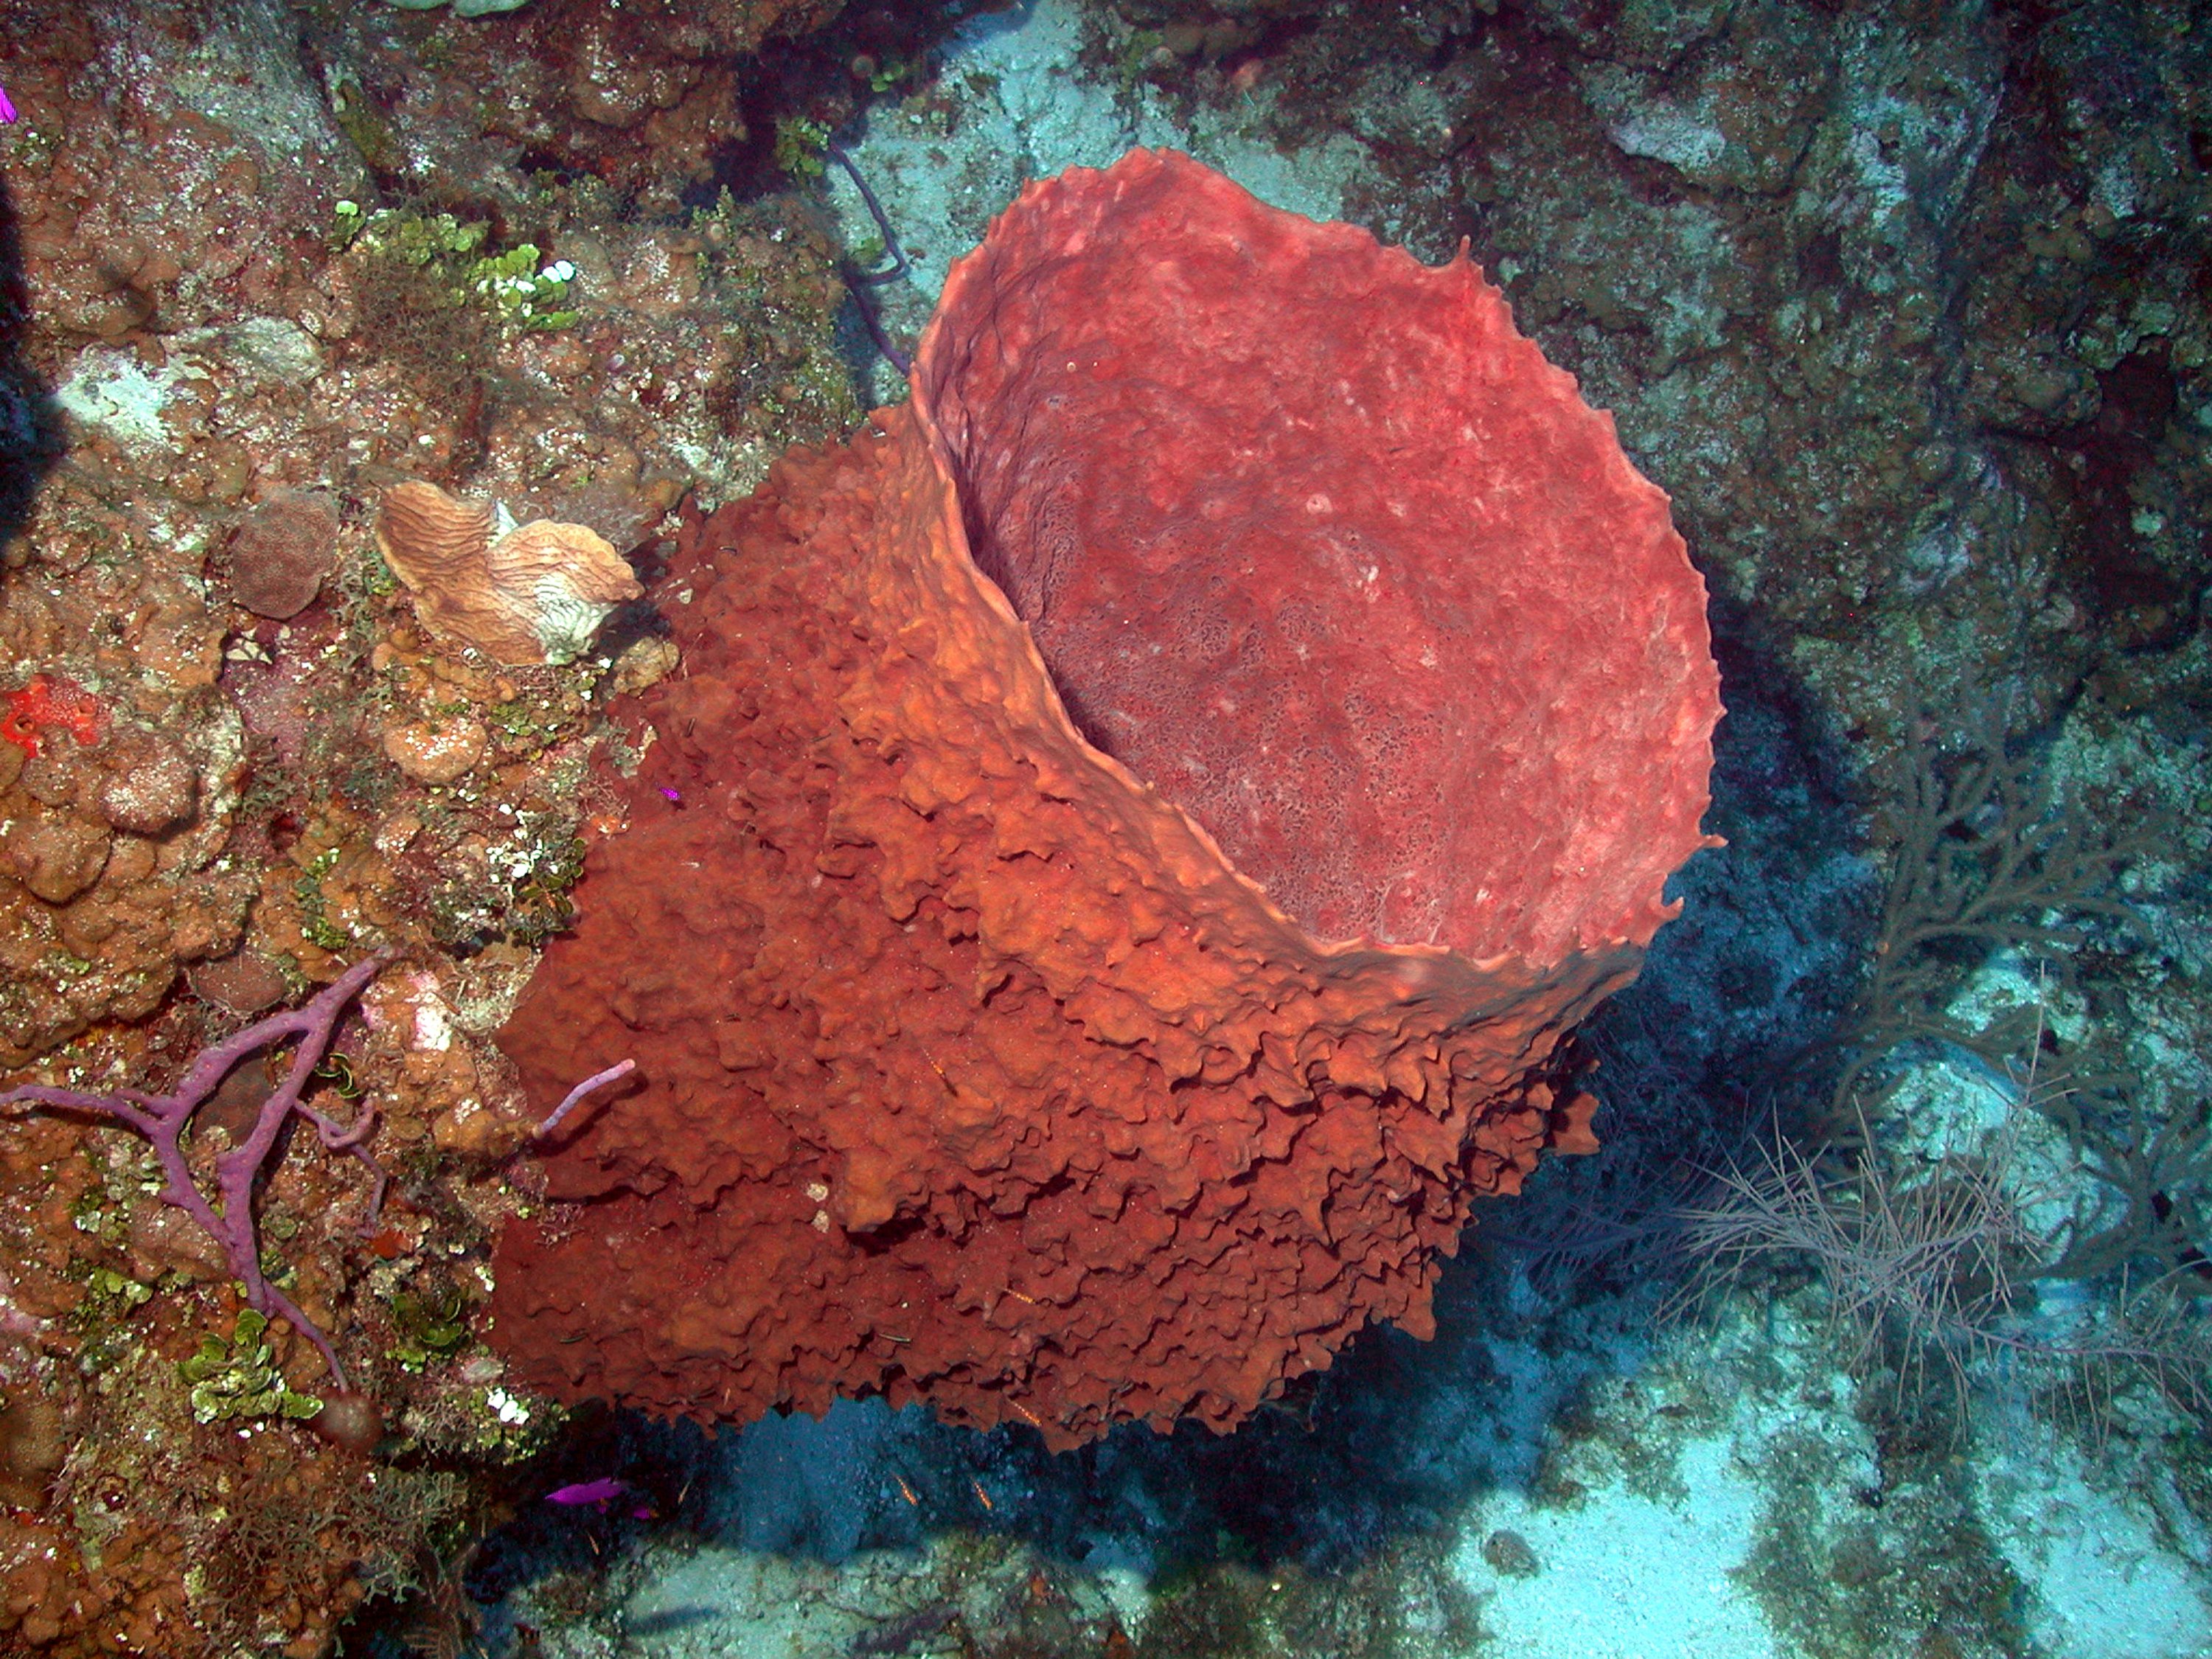 Photograph of a barrel sponge (Xestospongia muta)